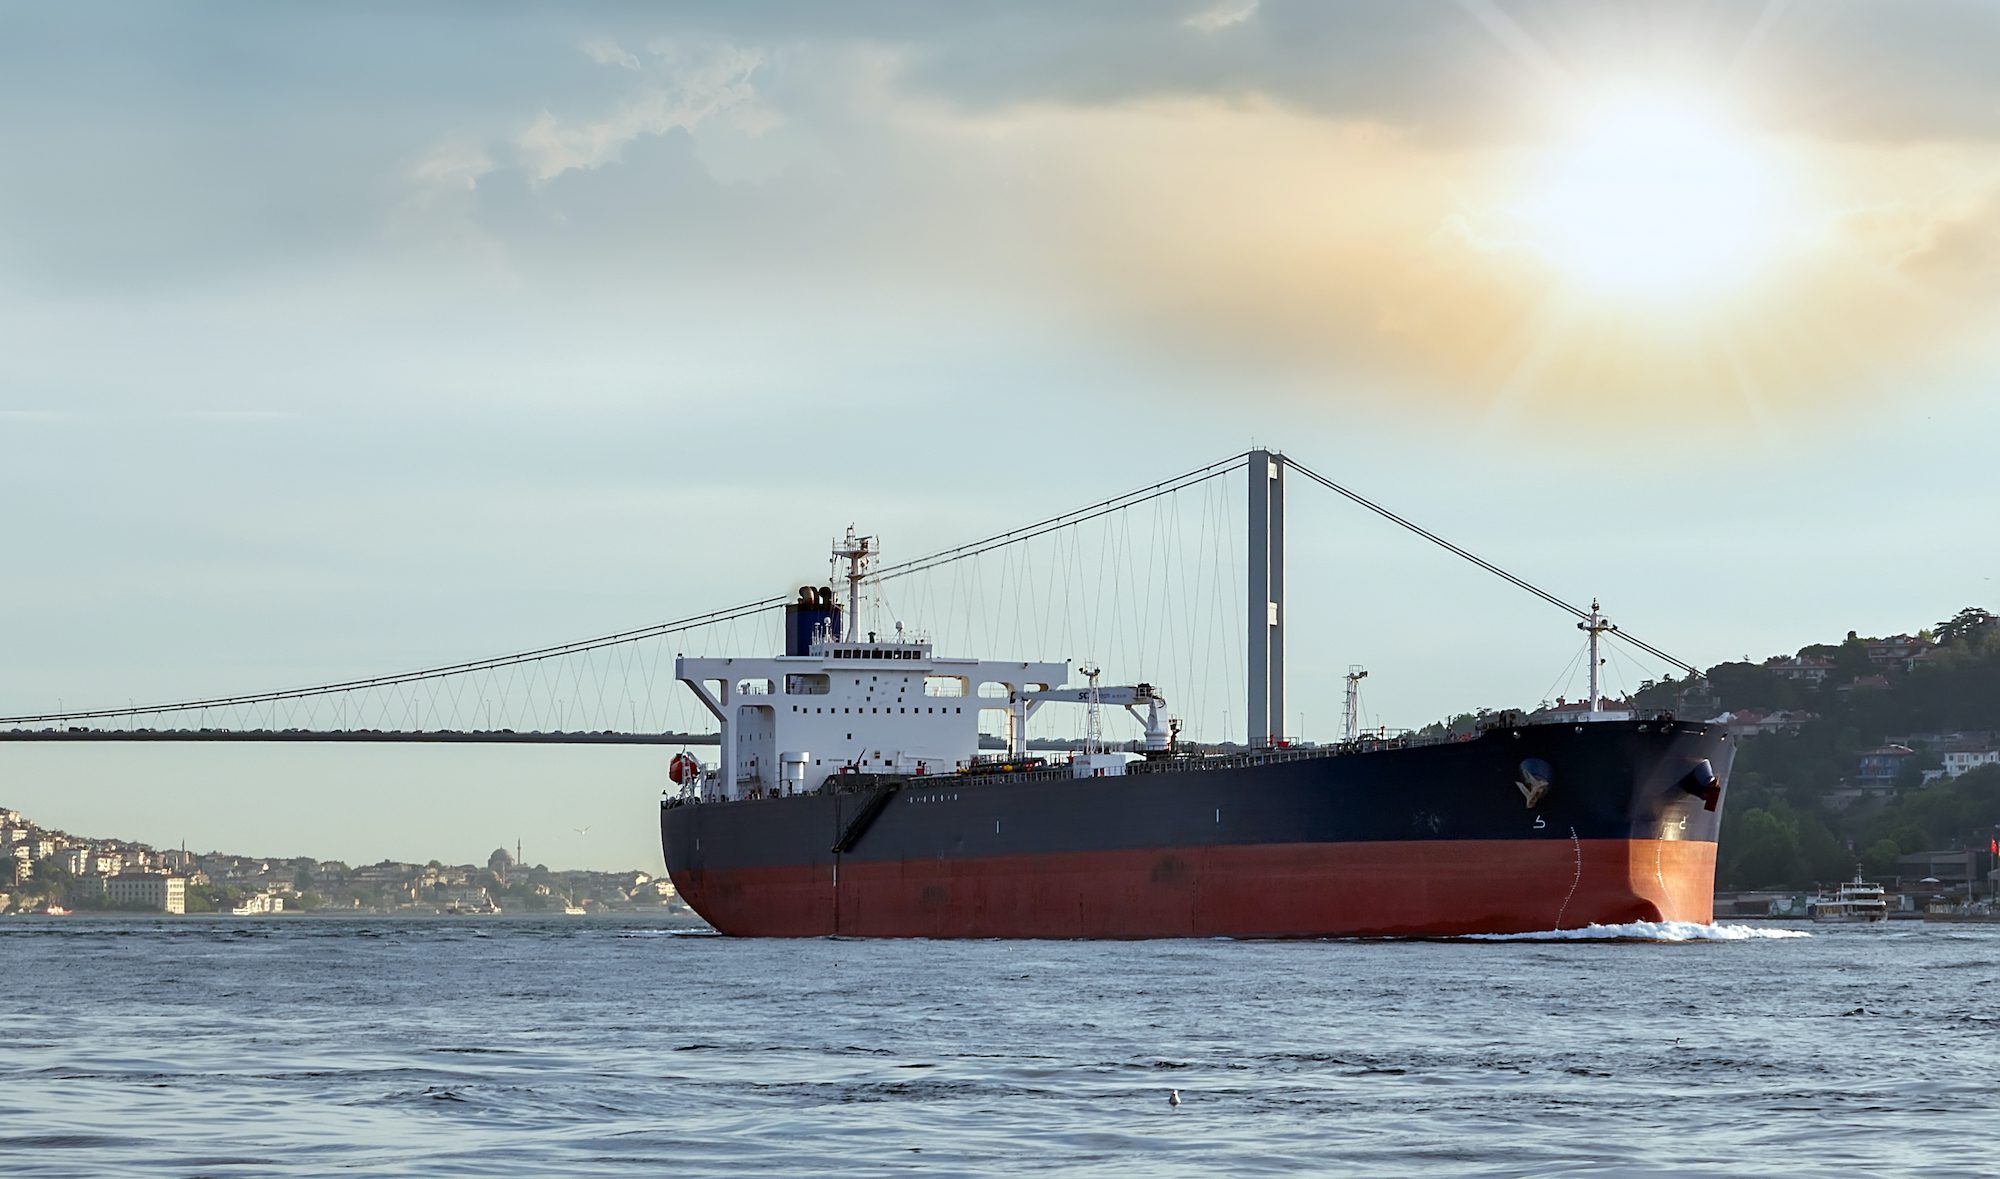 Tanker Jam Off Turkey as Price Cap on Russian Crude Kicks In